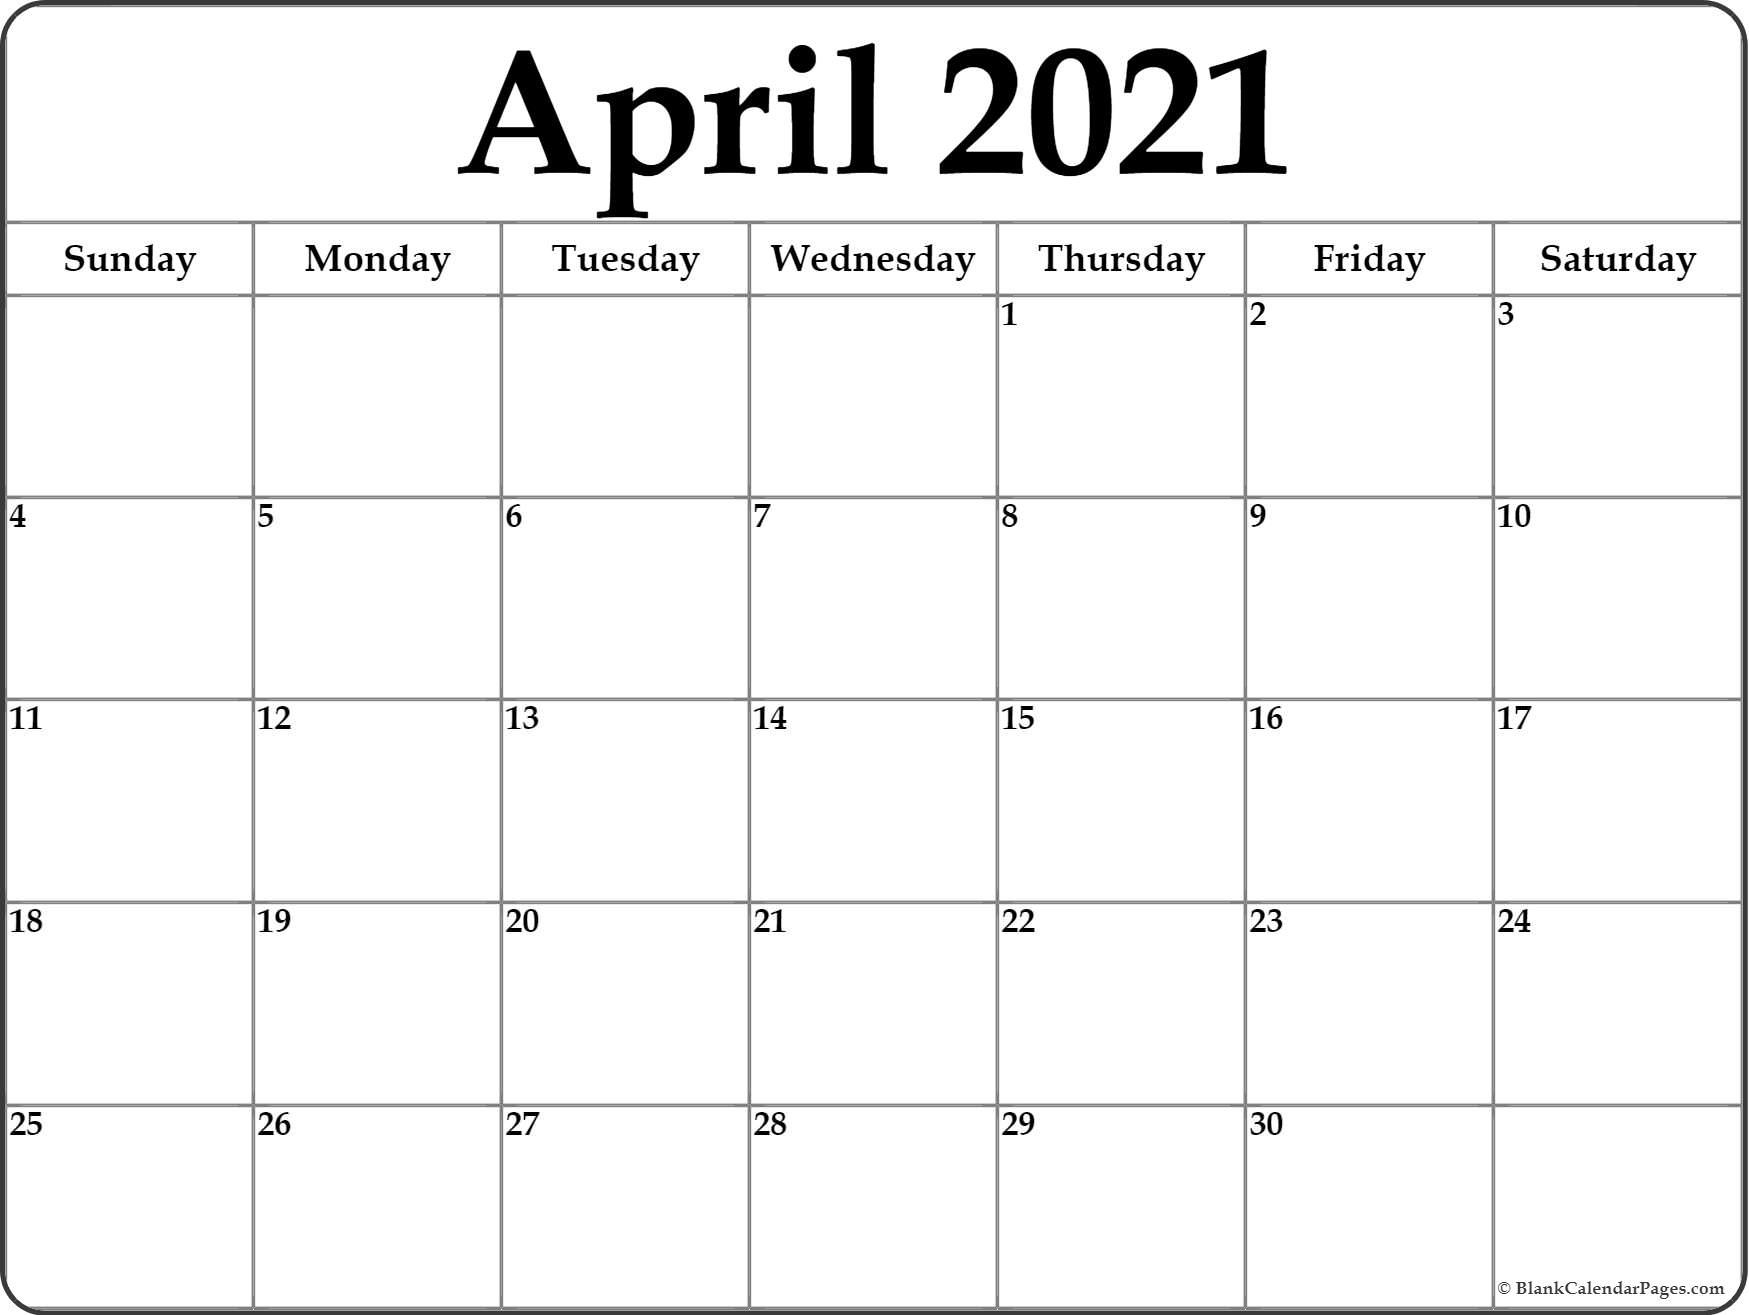 April 2021 Calendar | Free Printable Monthly Calendars